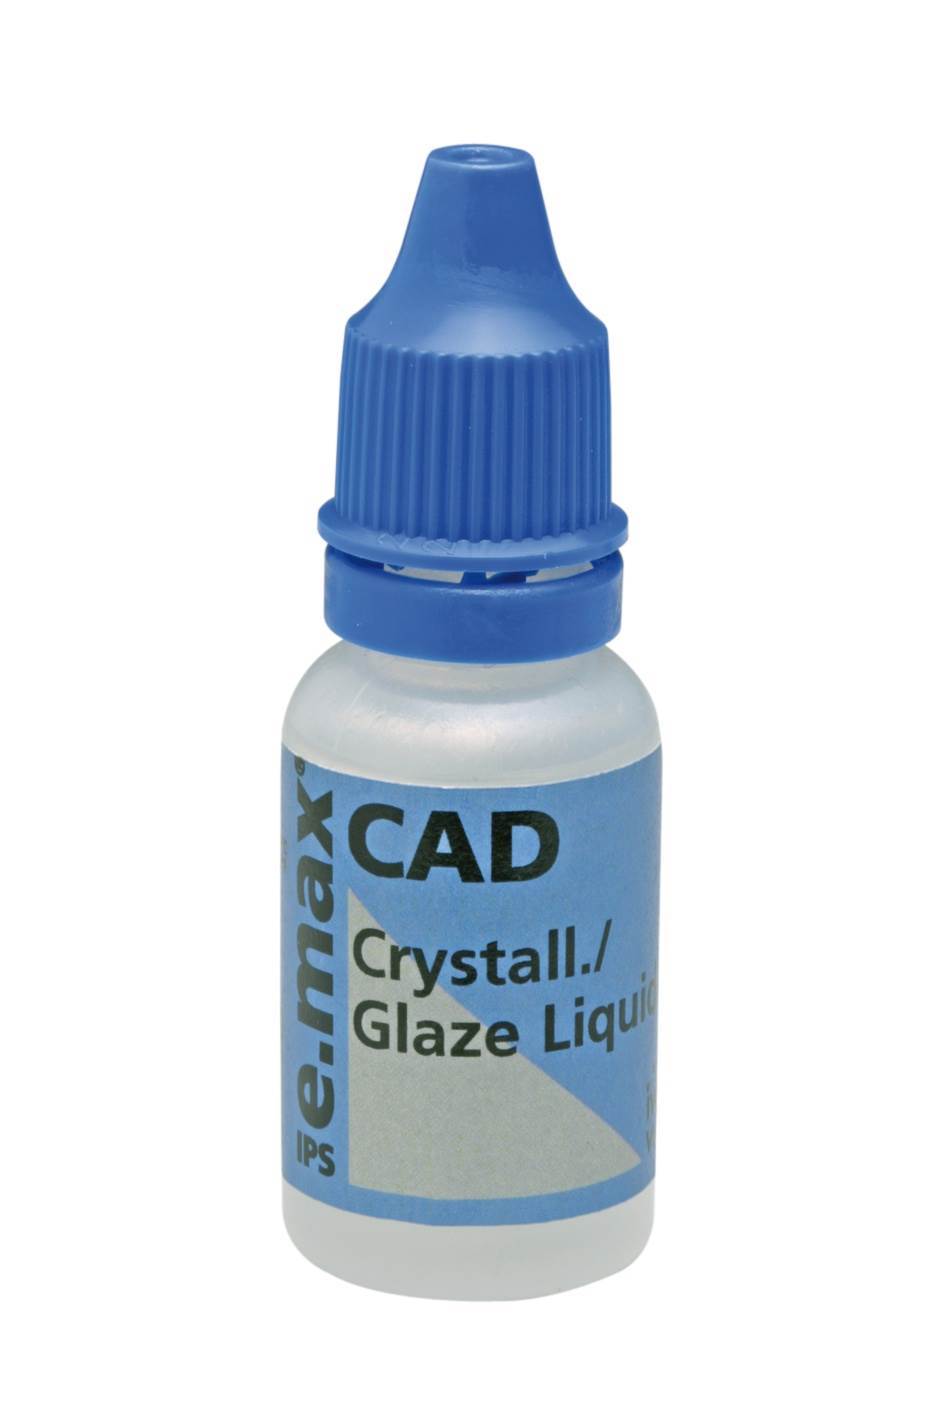 IPS e.max CAD Crystall./Glaze Liquid 15ml